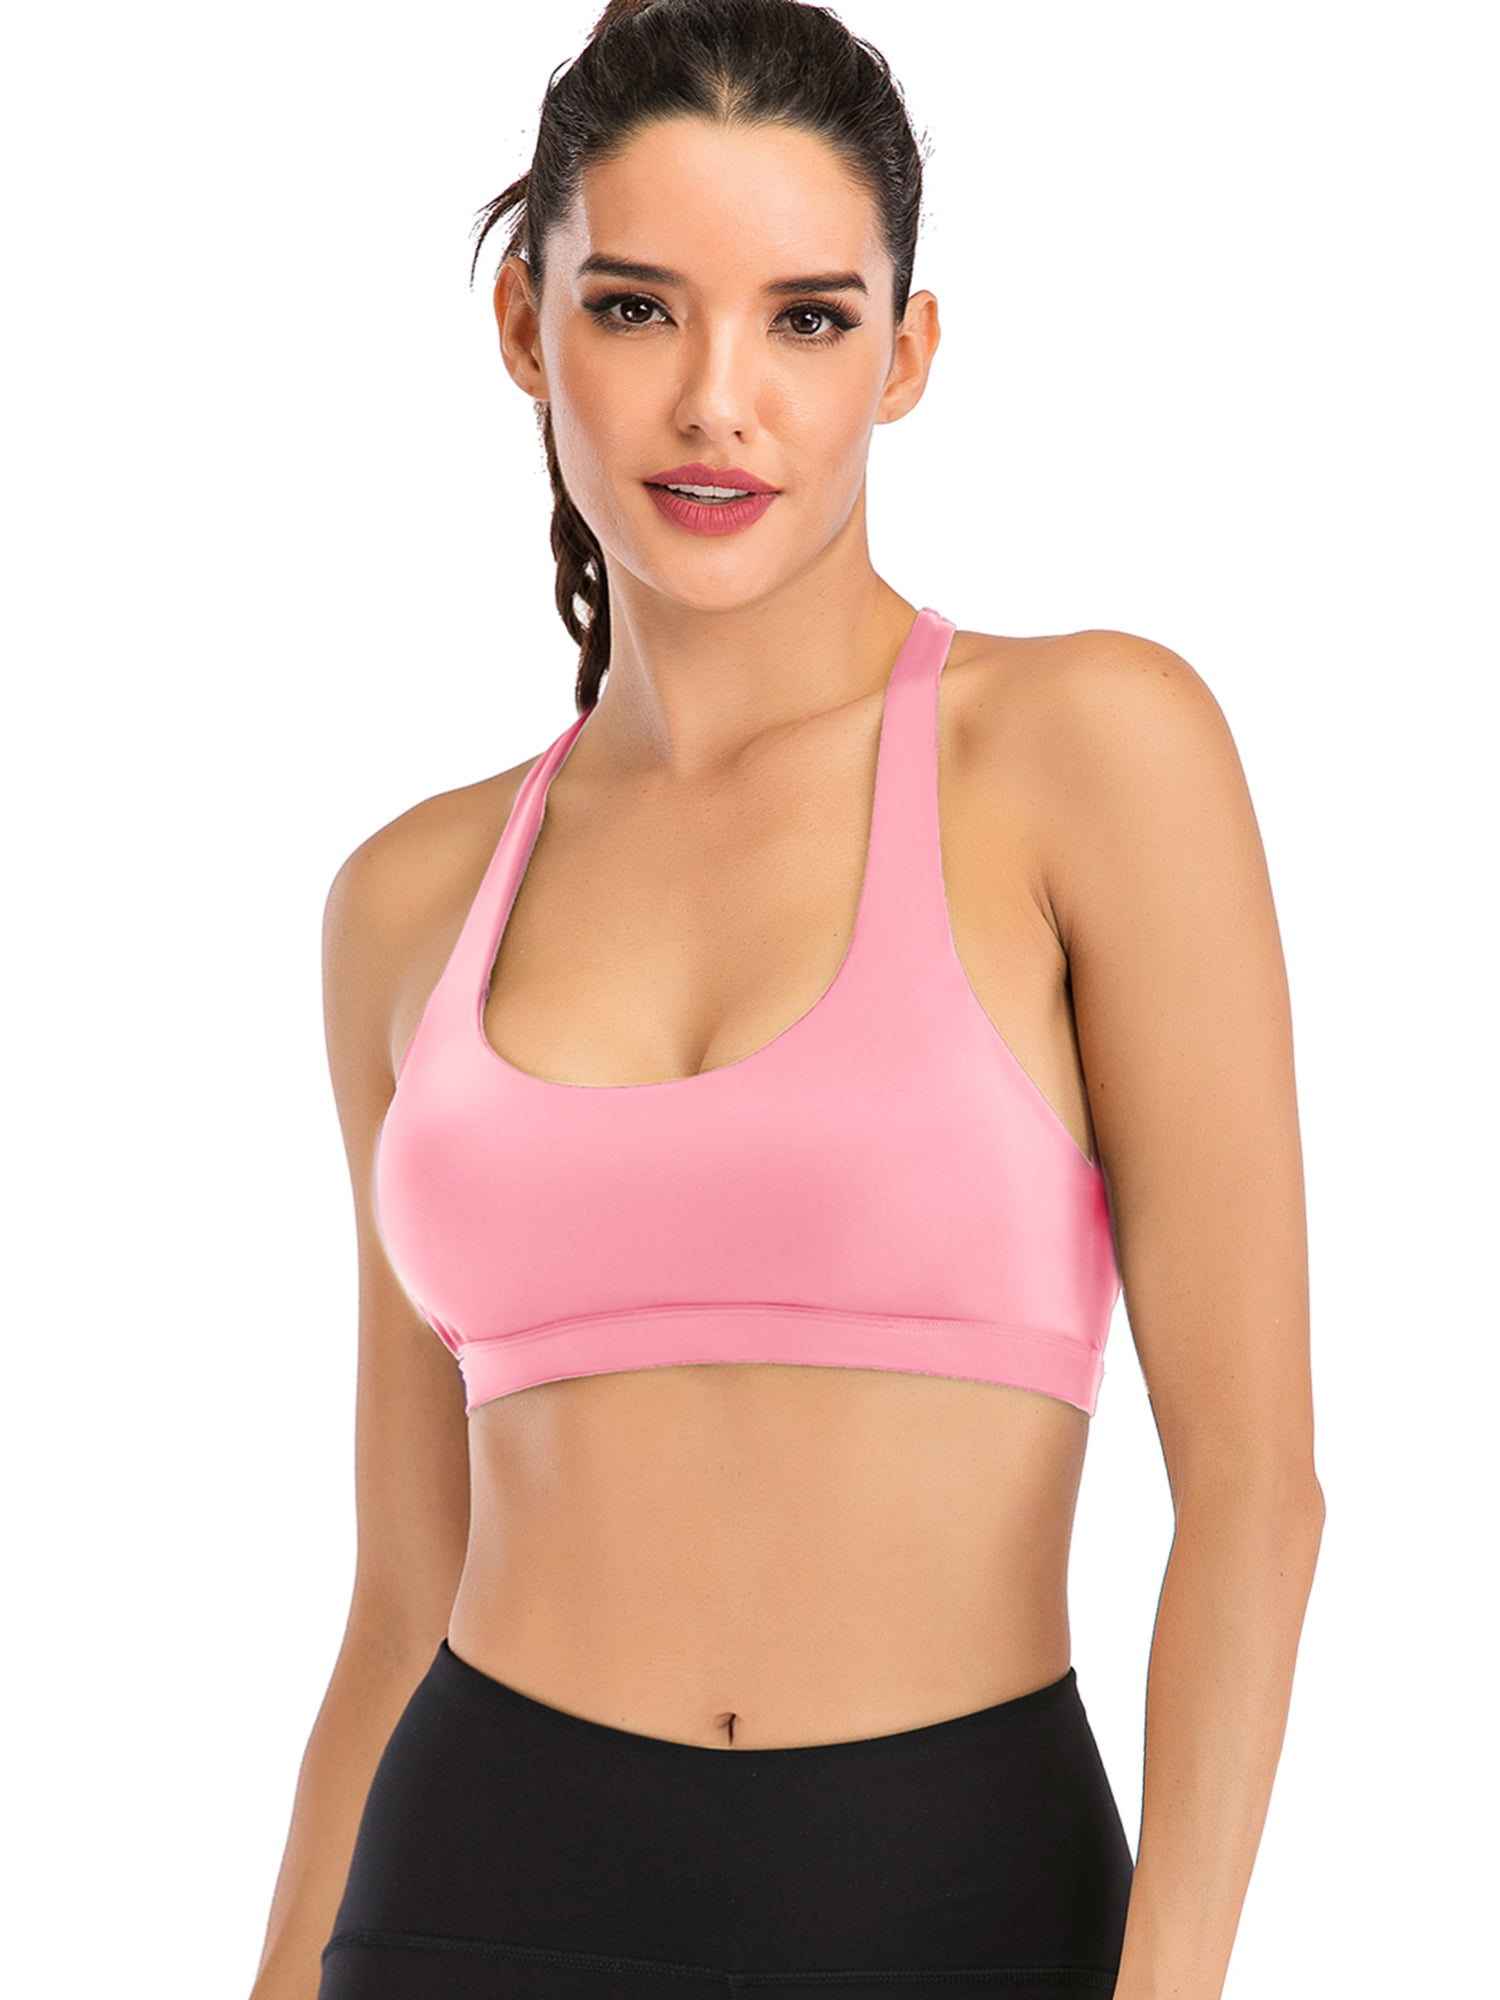 DODOING Women's Sports Bras Yoga Fitness Stretch Strappy Padded Activewear  Bras Workout Tank Top Vest Sports Bra 